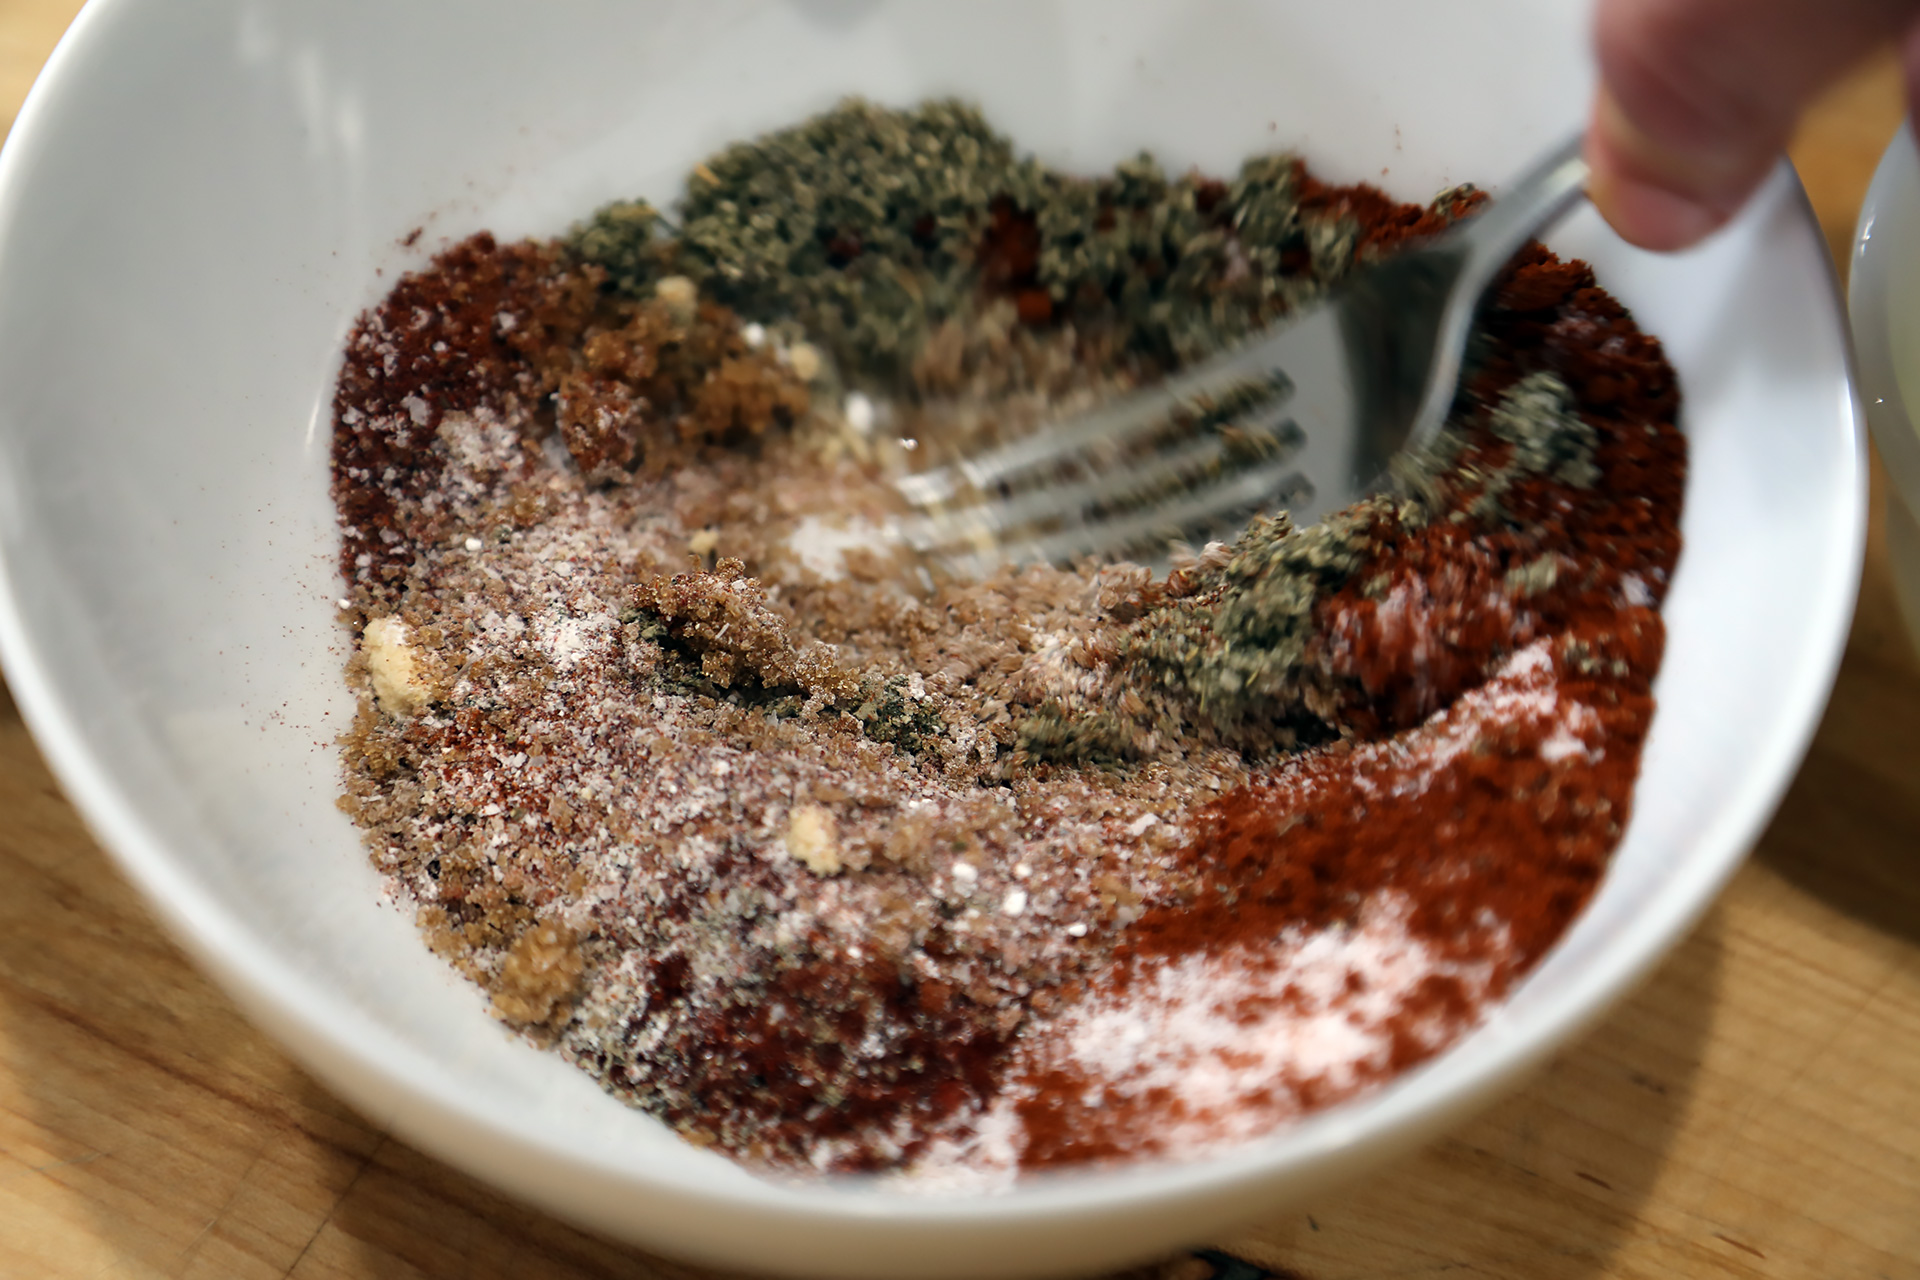 Stir together the spice rub ingredients.